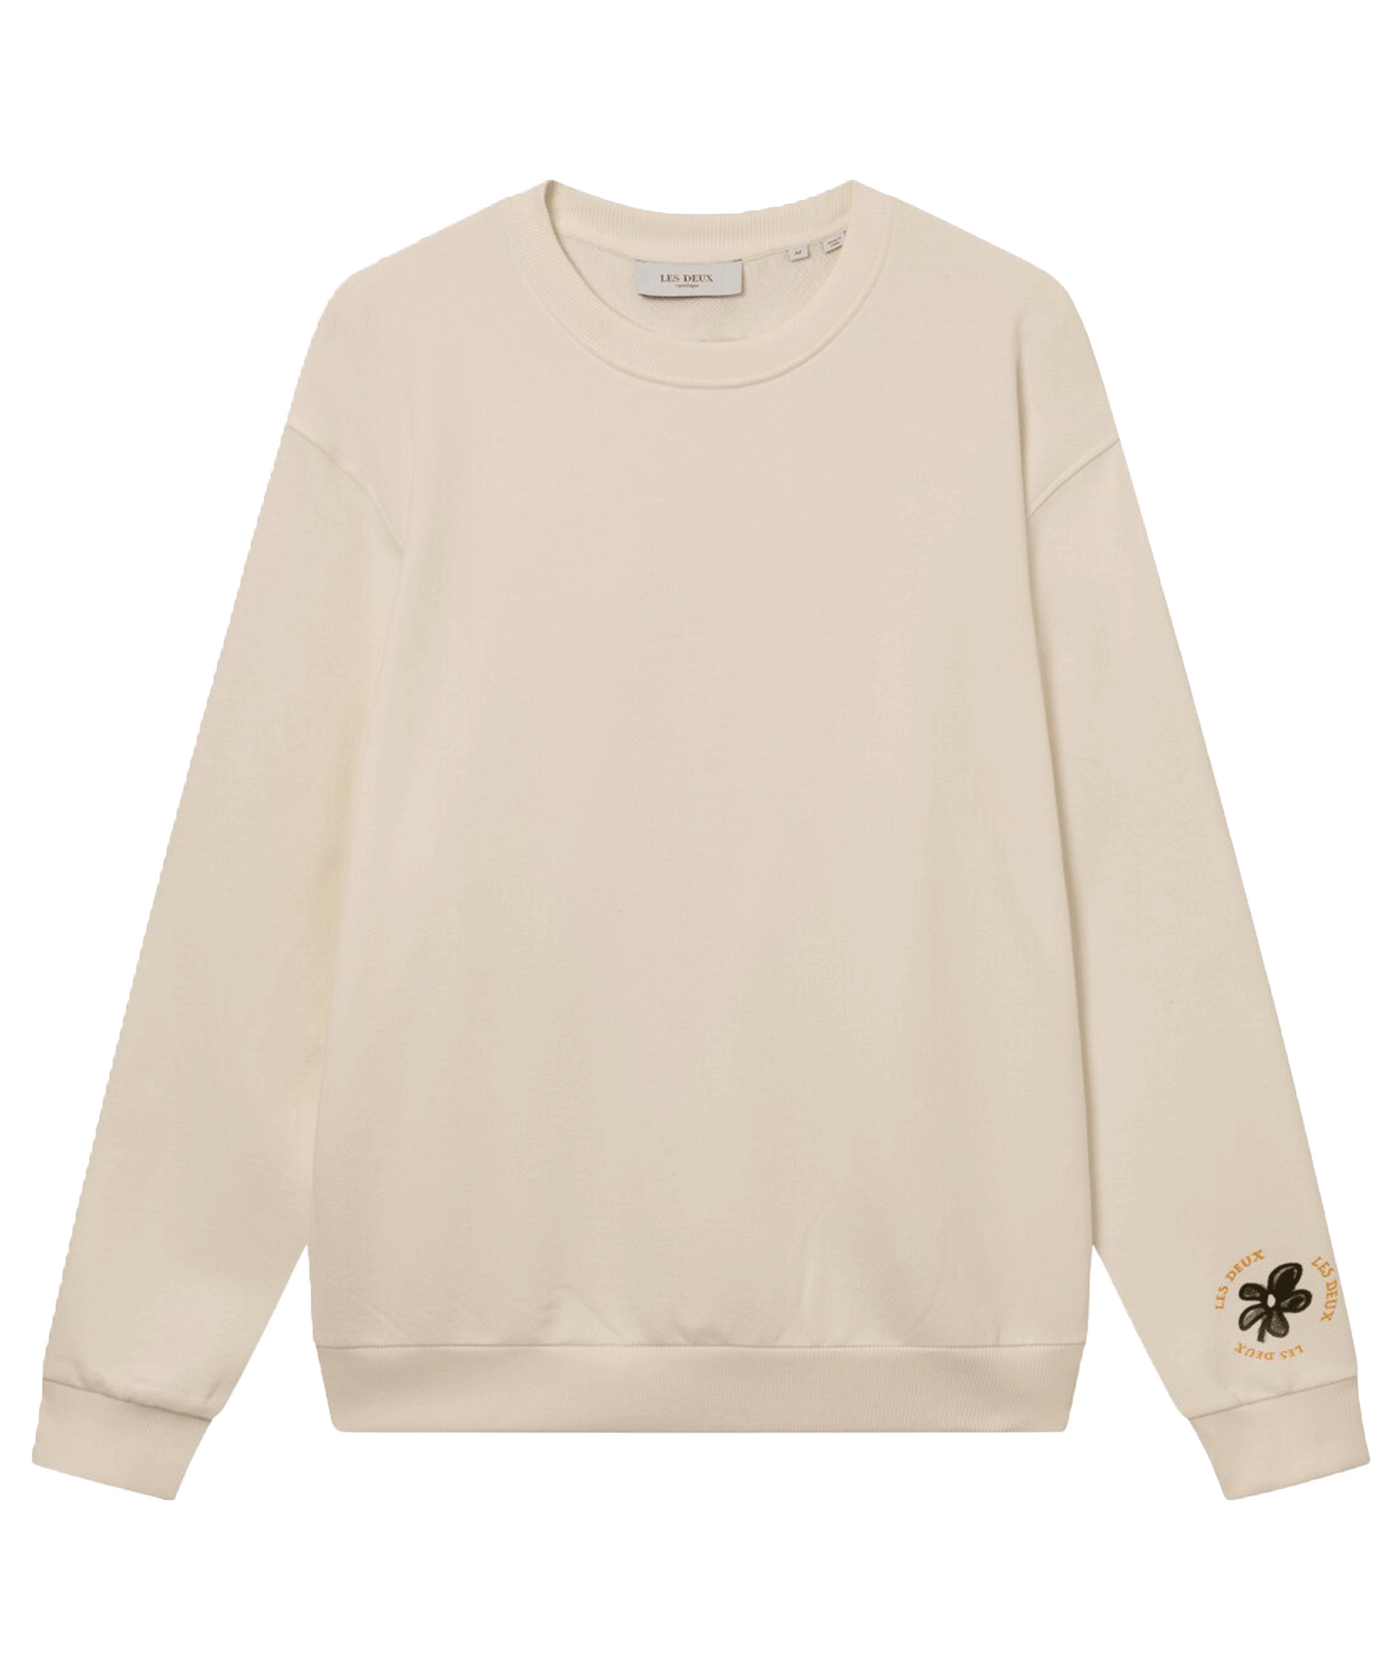 Les Deux - Ldm200149 - Duality Sweatshirt - Light Ivory